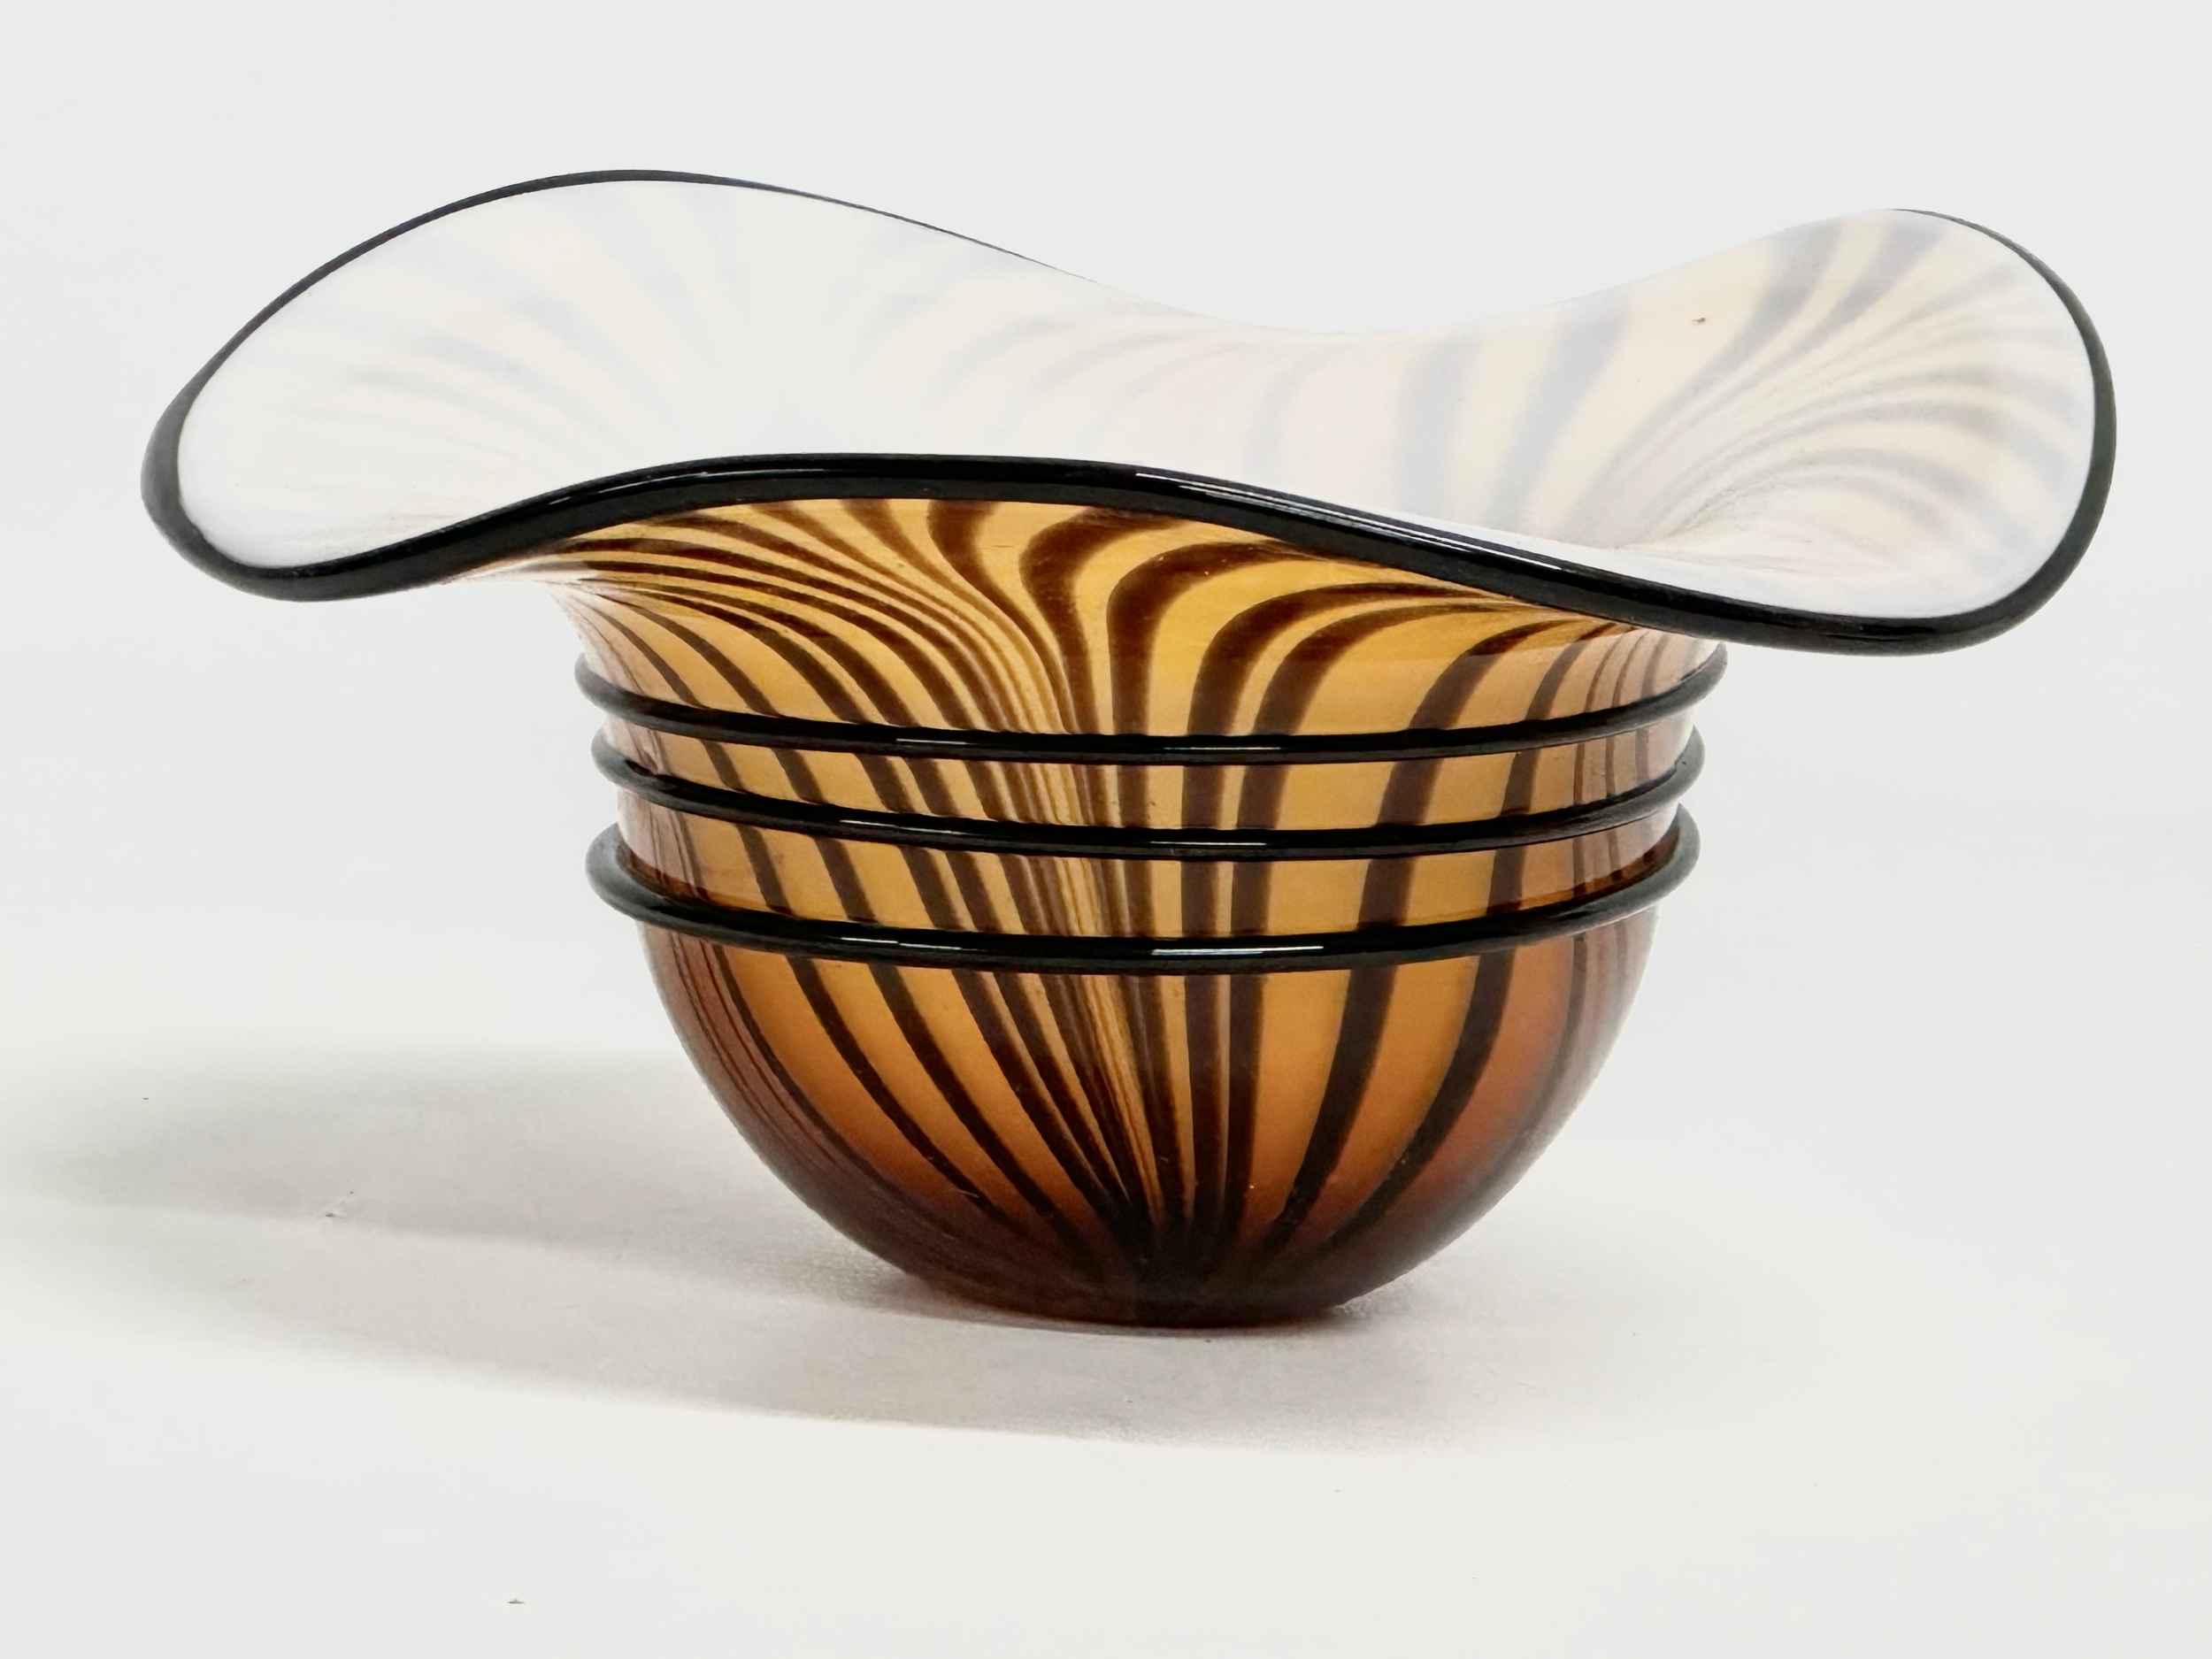 An Italian art glass bowl. 18x18x9.5cm